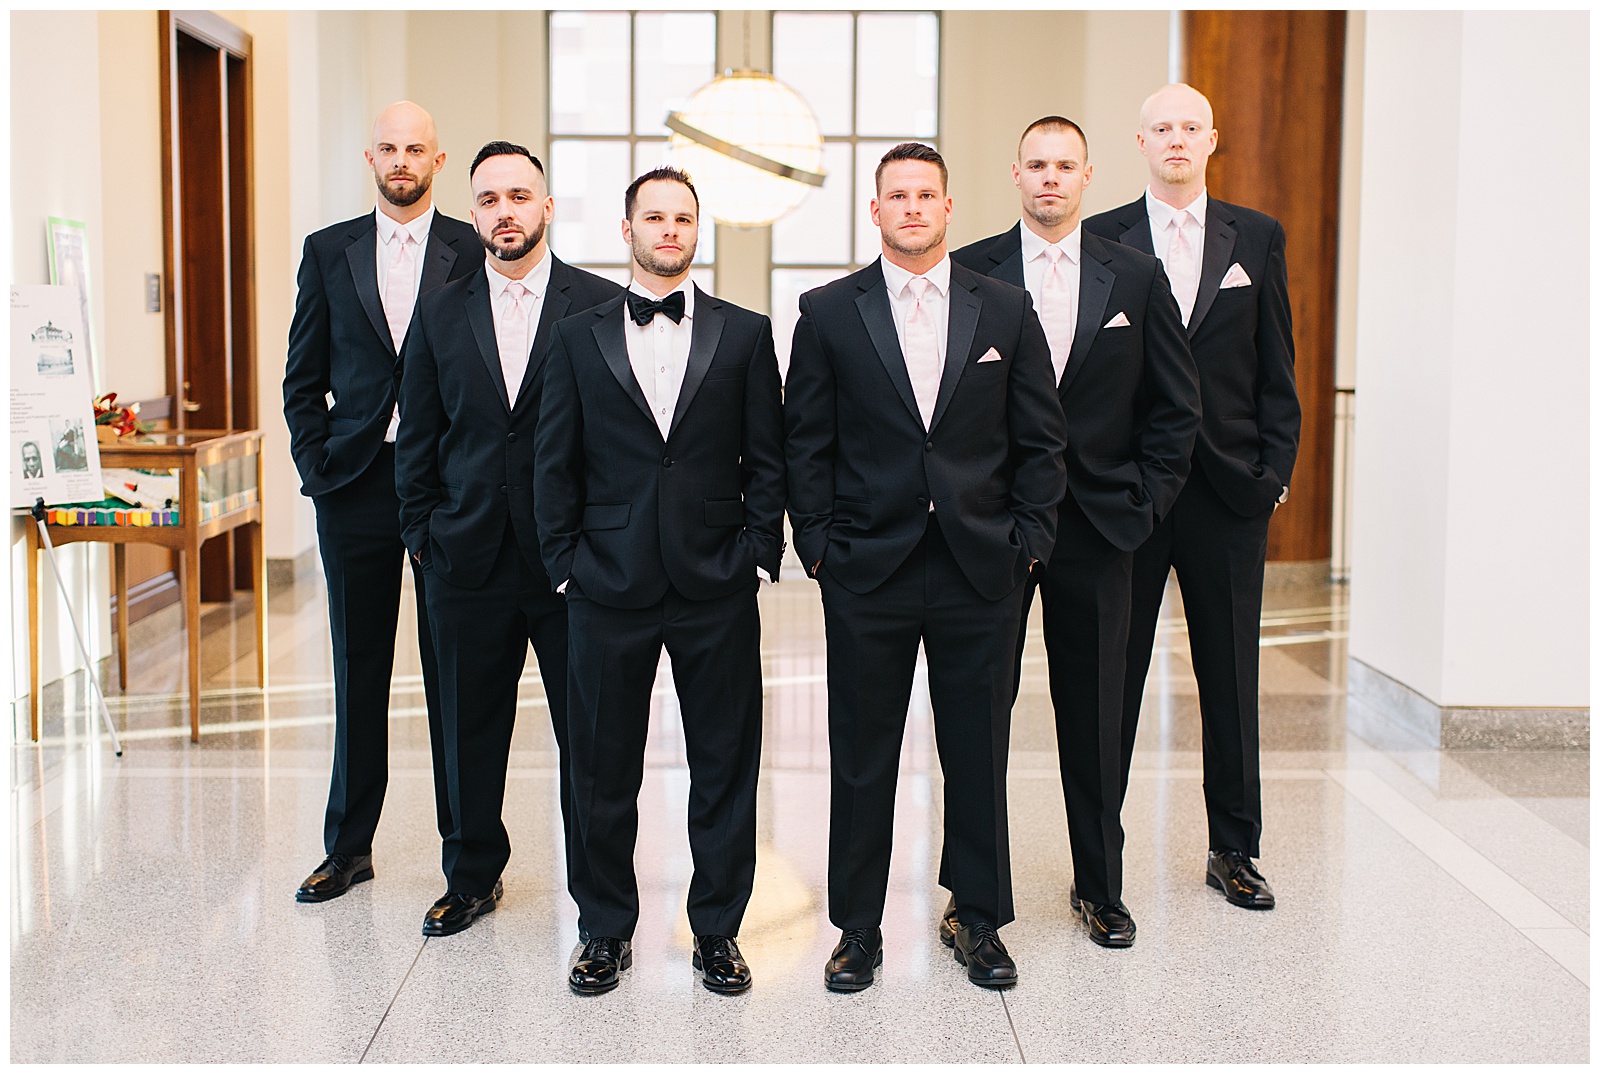 jacksonville library wedding - black groomsmen suits - classic groomsmen attire